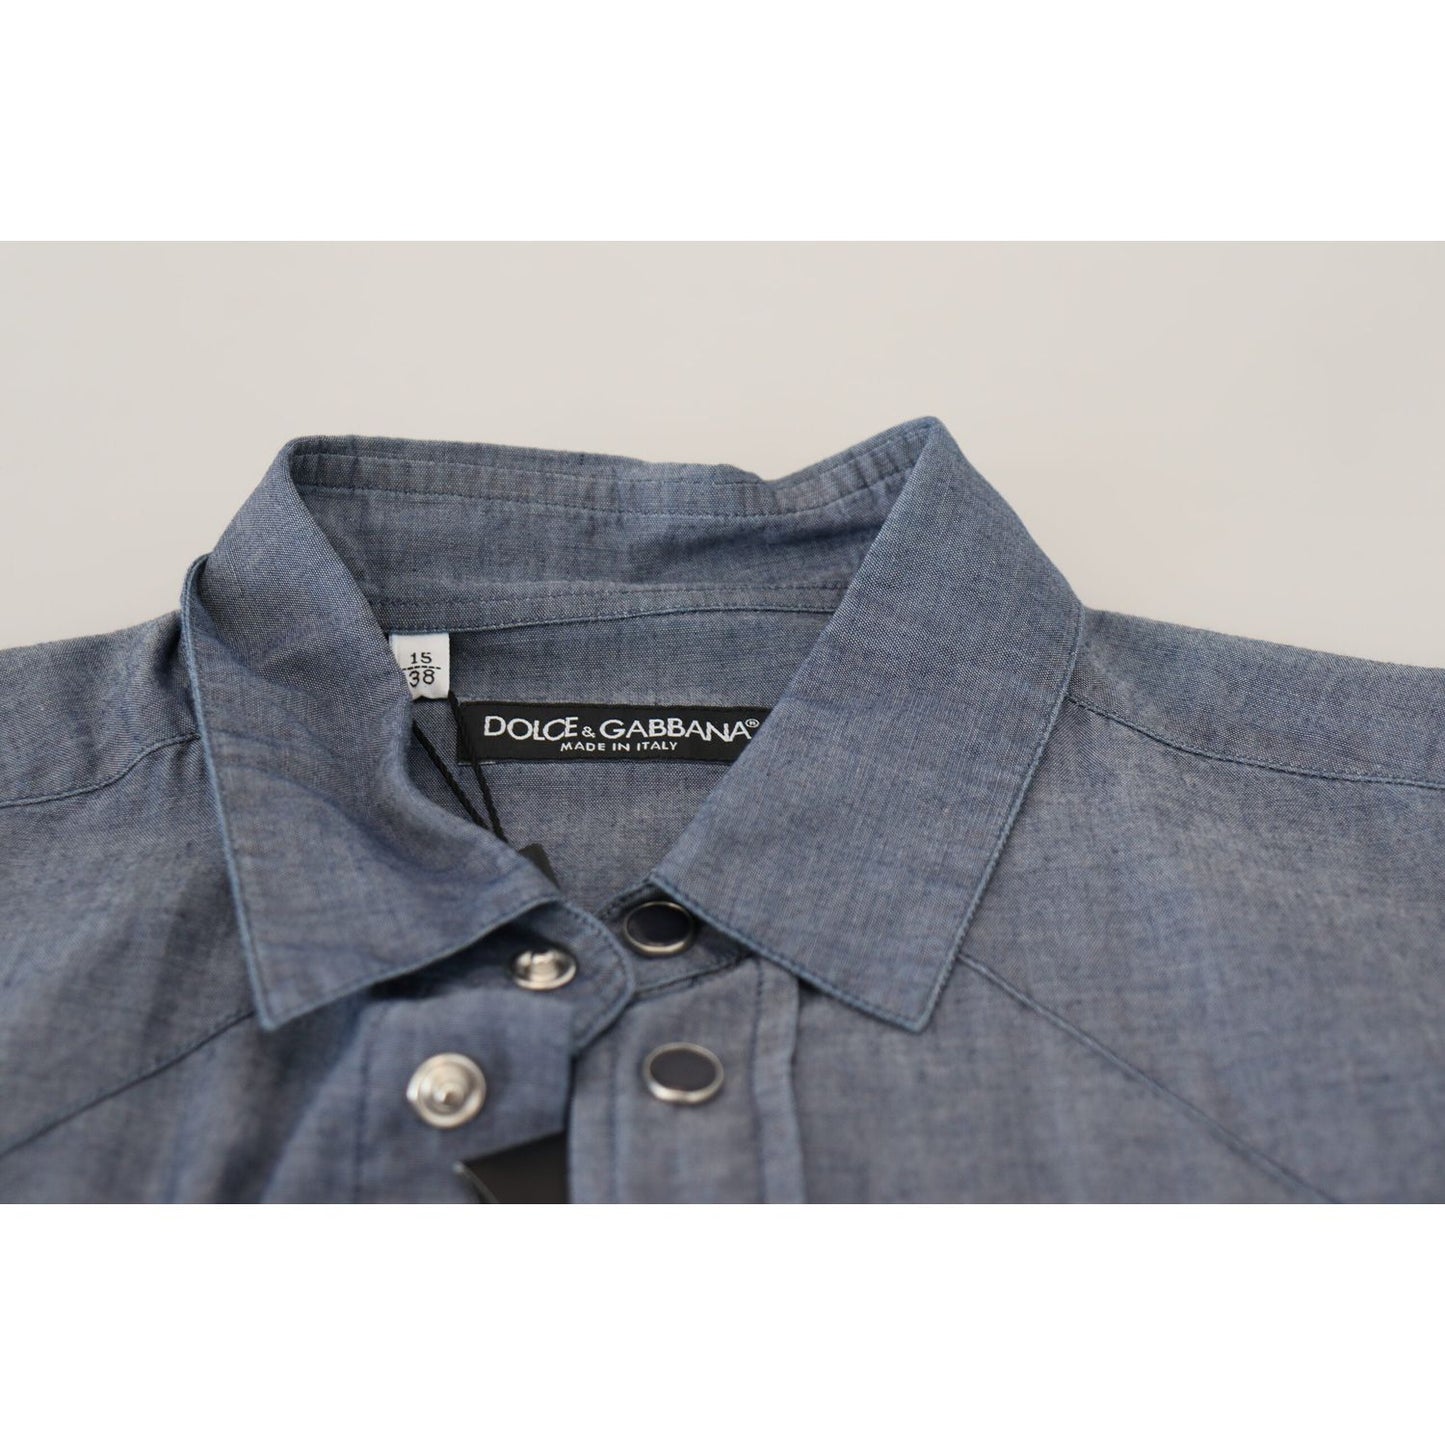 Dolce & Gabbana Elegant Casual Blue Cotton Shirt blue-cotton-collared-long-sleeve-casual-shirt IMG_4449-scaled-6dd0338a-ba0.jpg